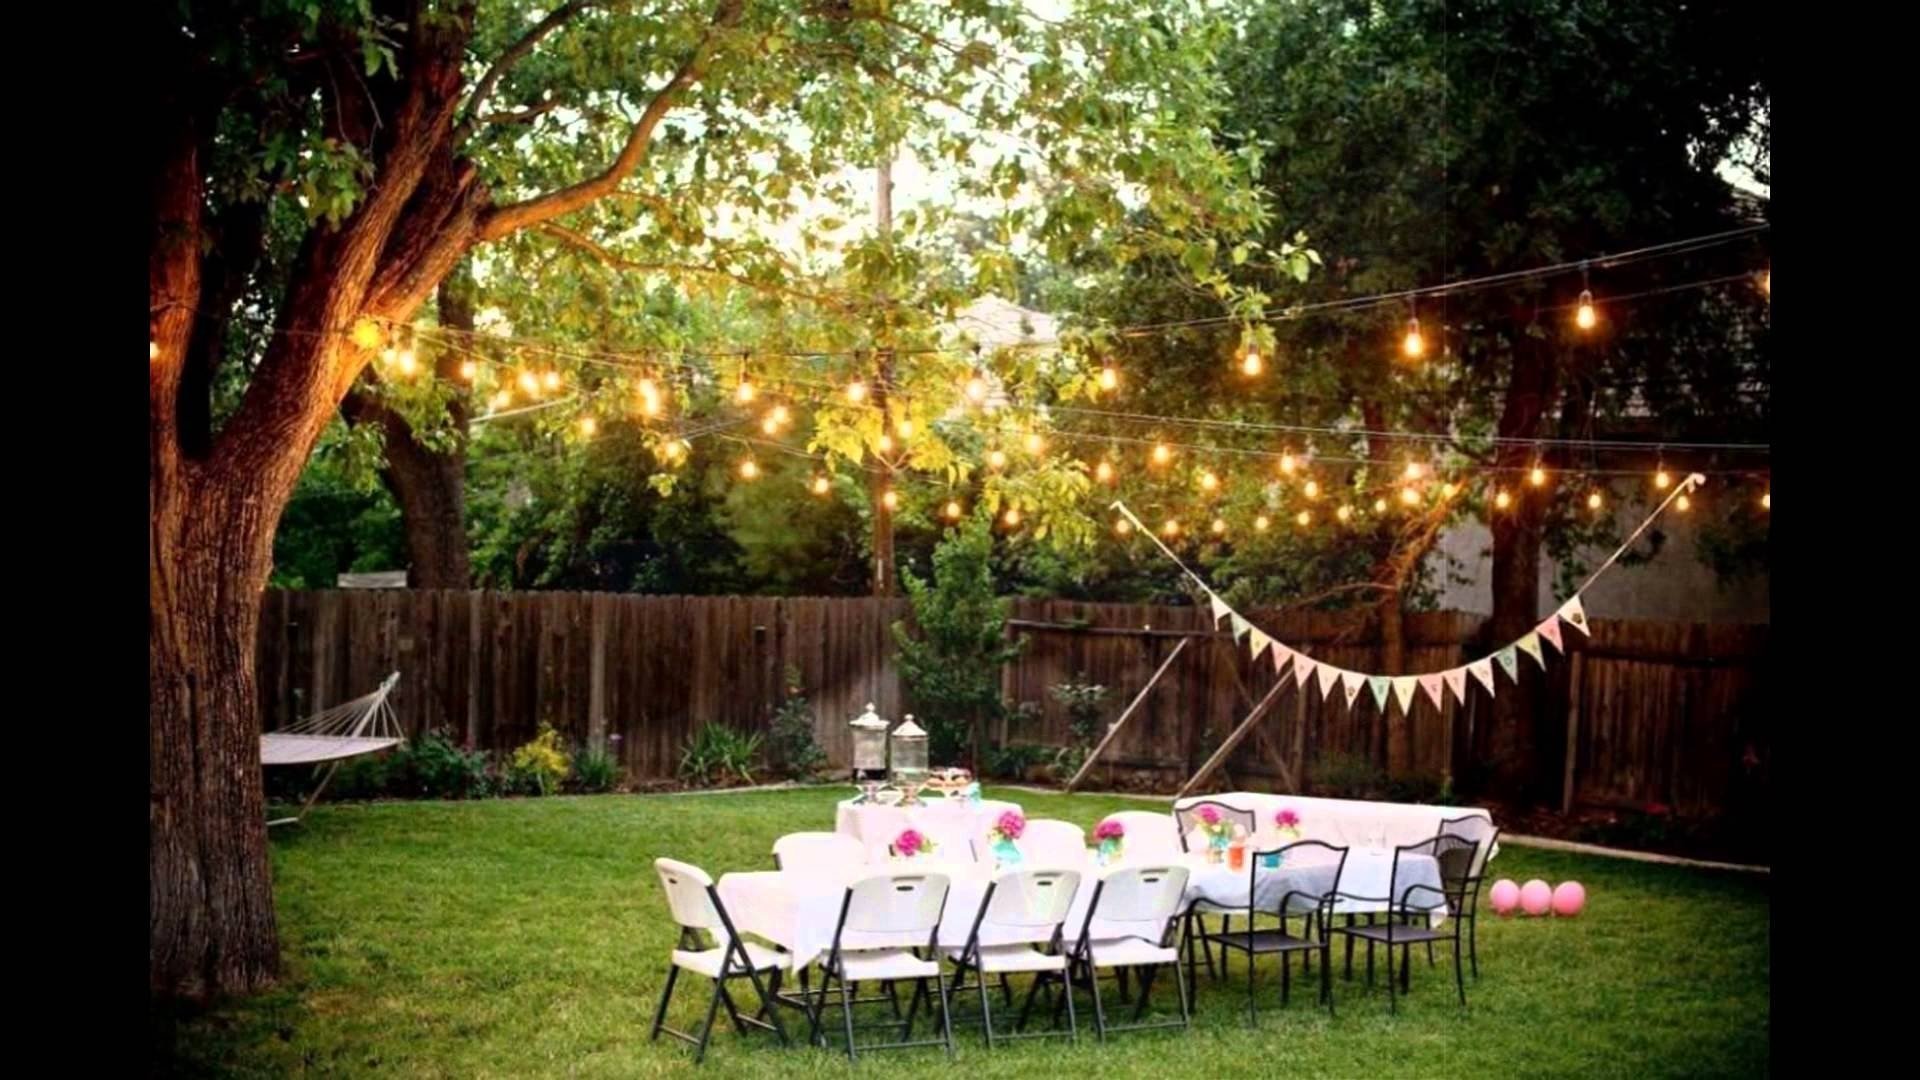 10 Cute Small Wedding Ideas On A Budget backyard weddings on a budget youtube 2 2023